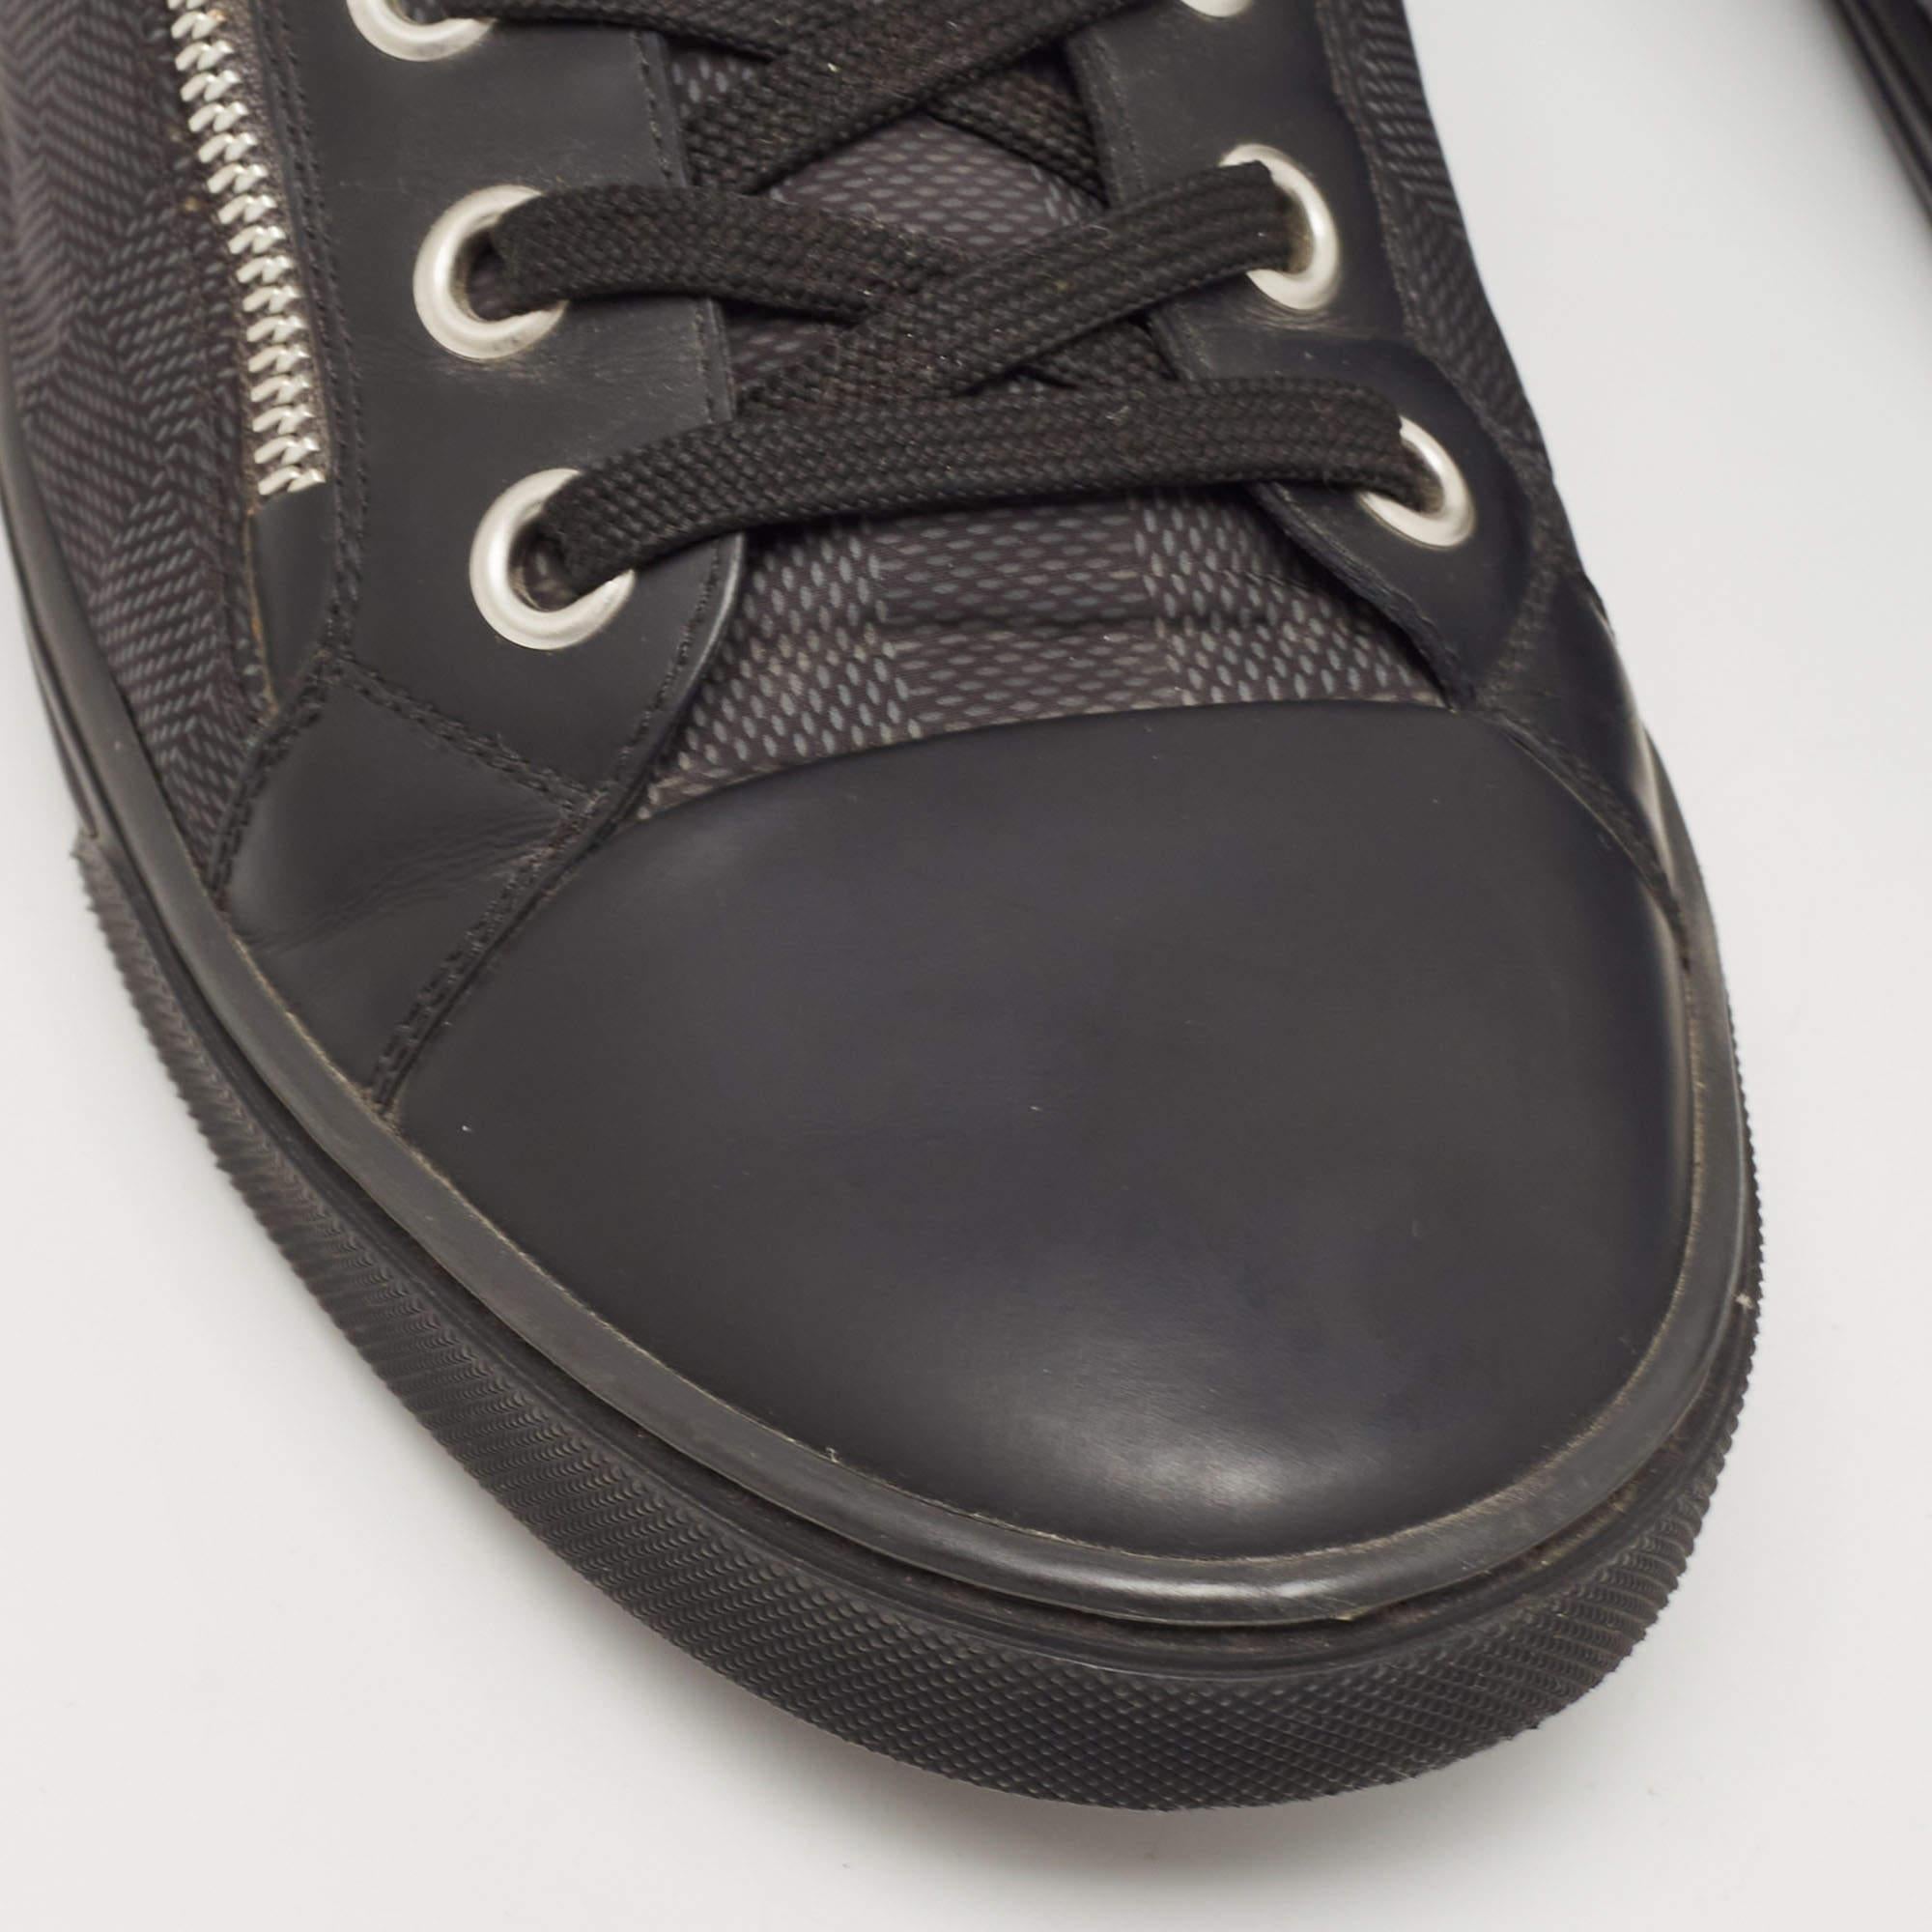 Louis Vuitton Black Damier Ebene Nylon and Leather Sneakers Size 43 1